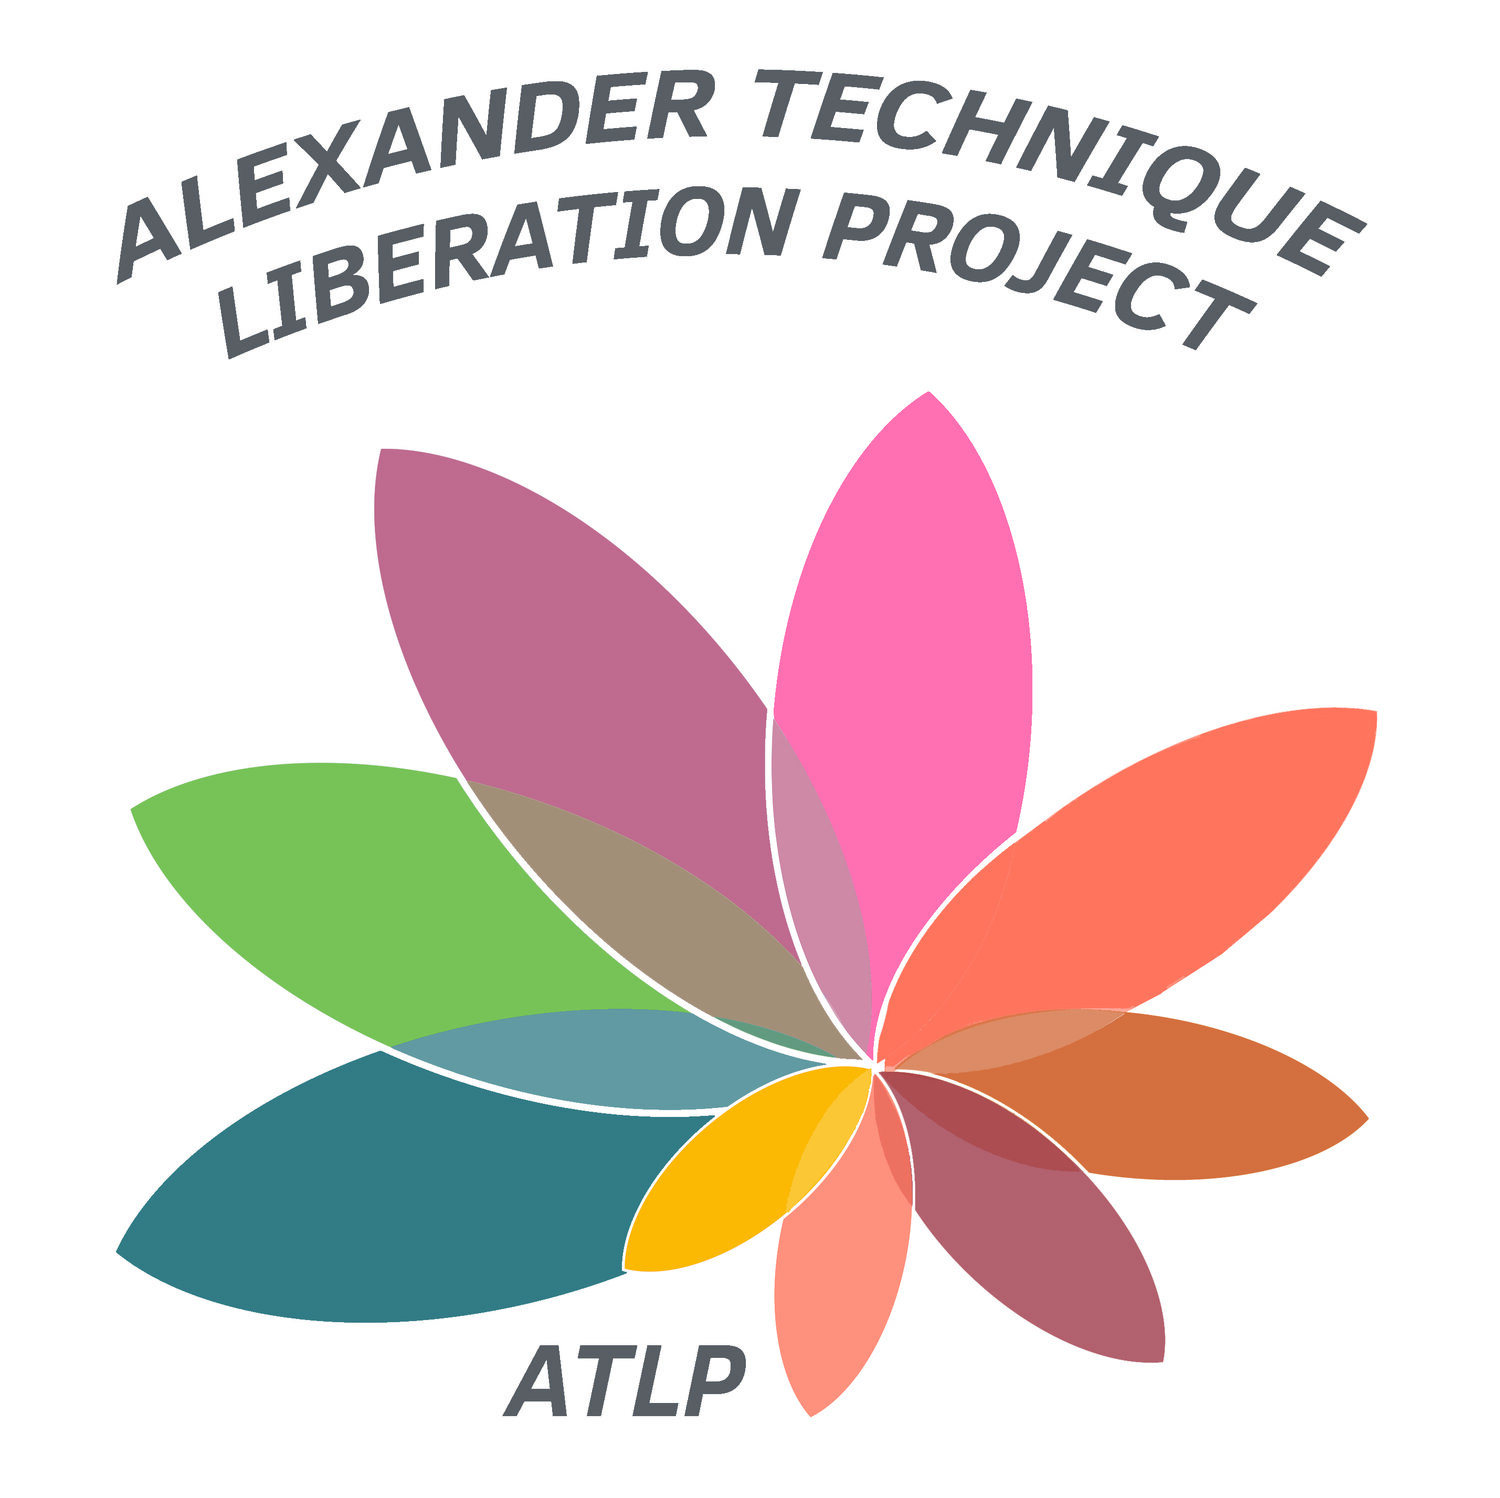 Alexander Technique Liberation Project